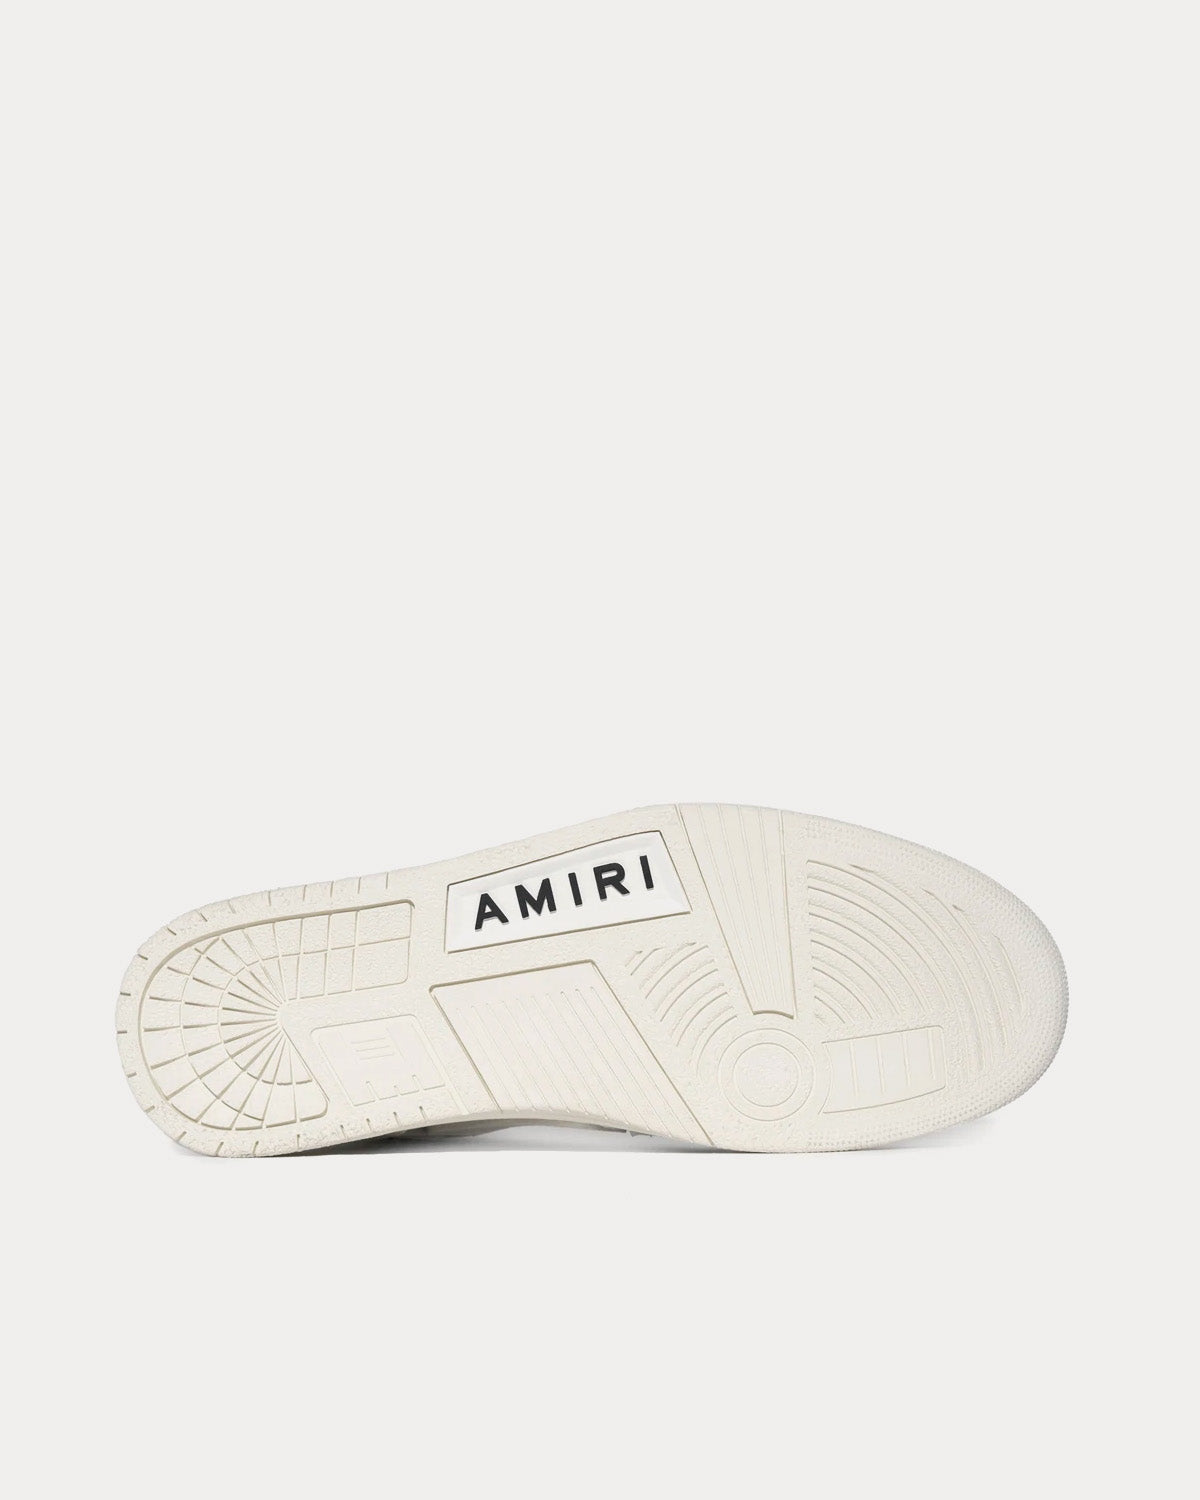 AMIRI - Skel-Top Hi White High Top Sneakers